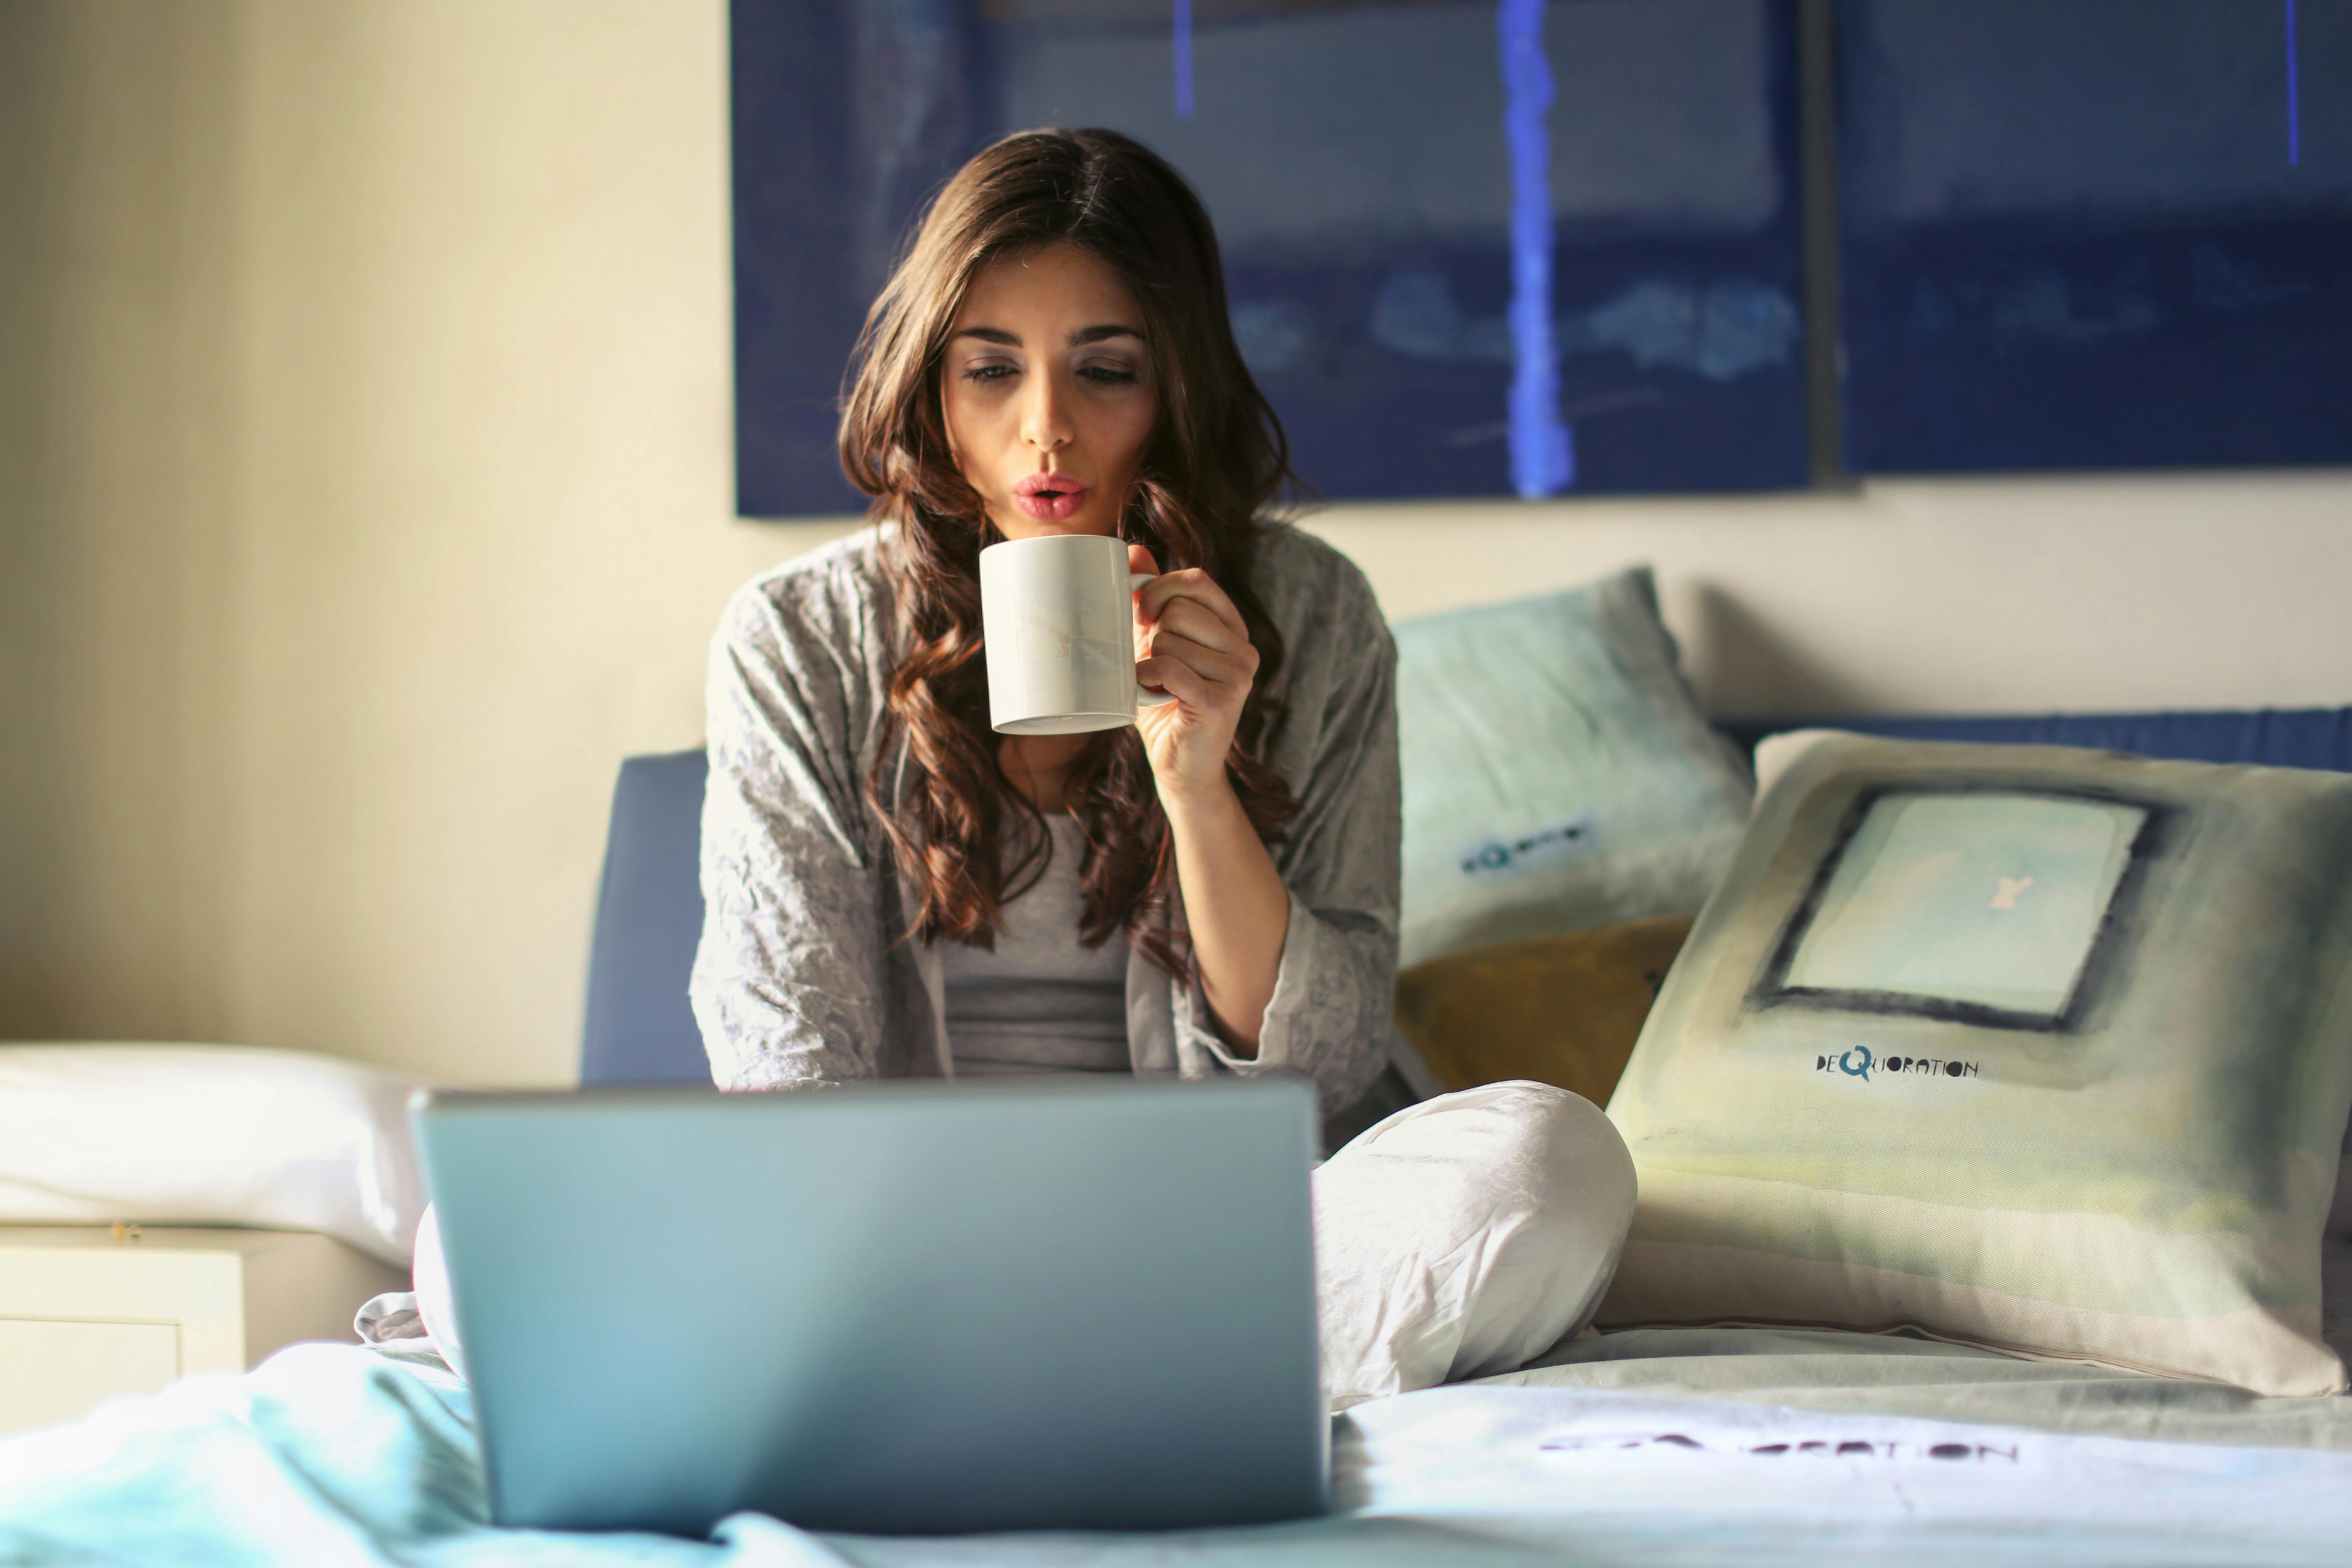 Woman drinks tea in front of laptop | Source: Pexels